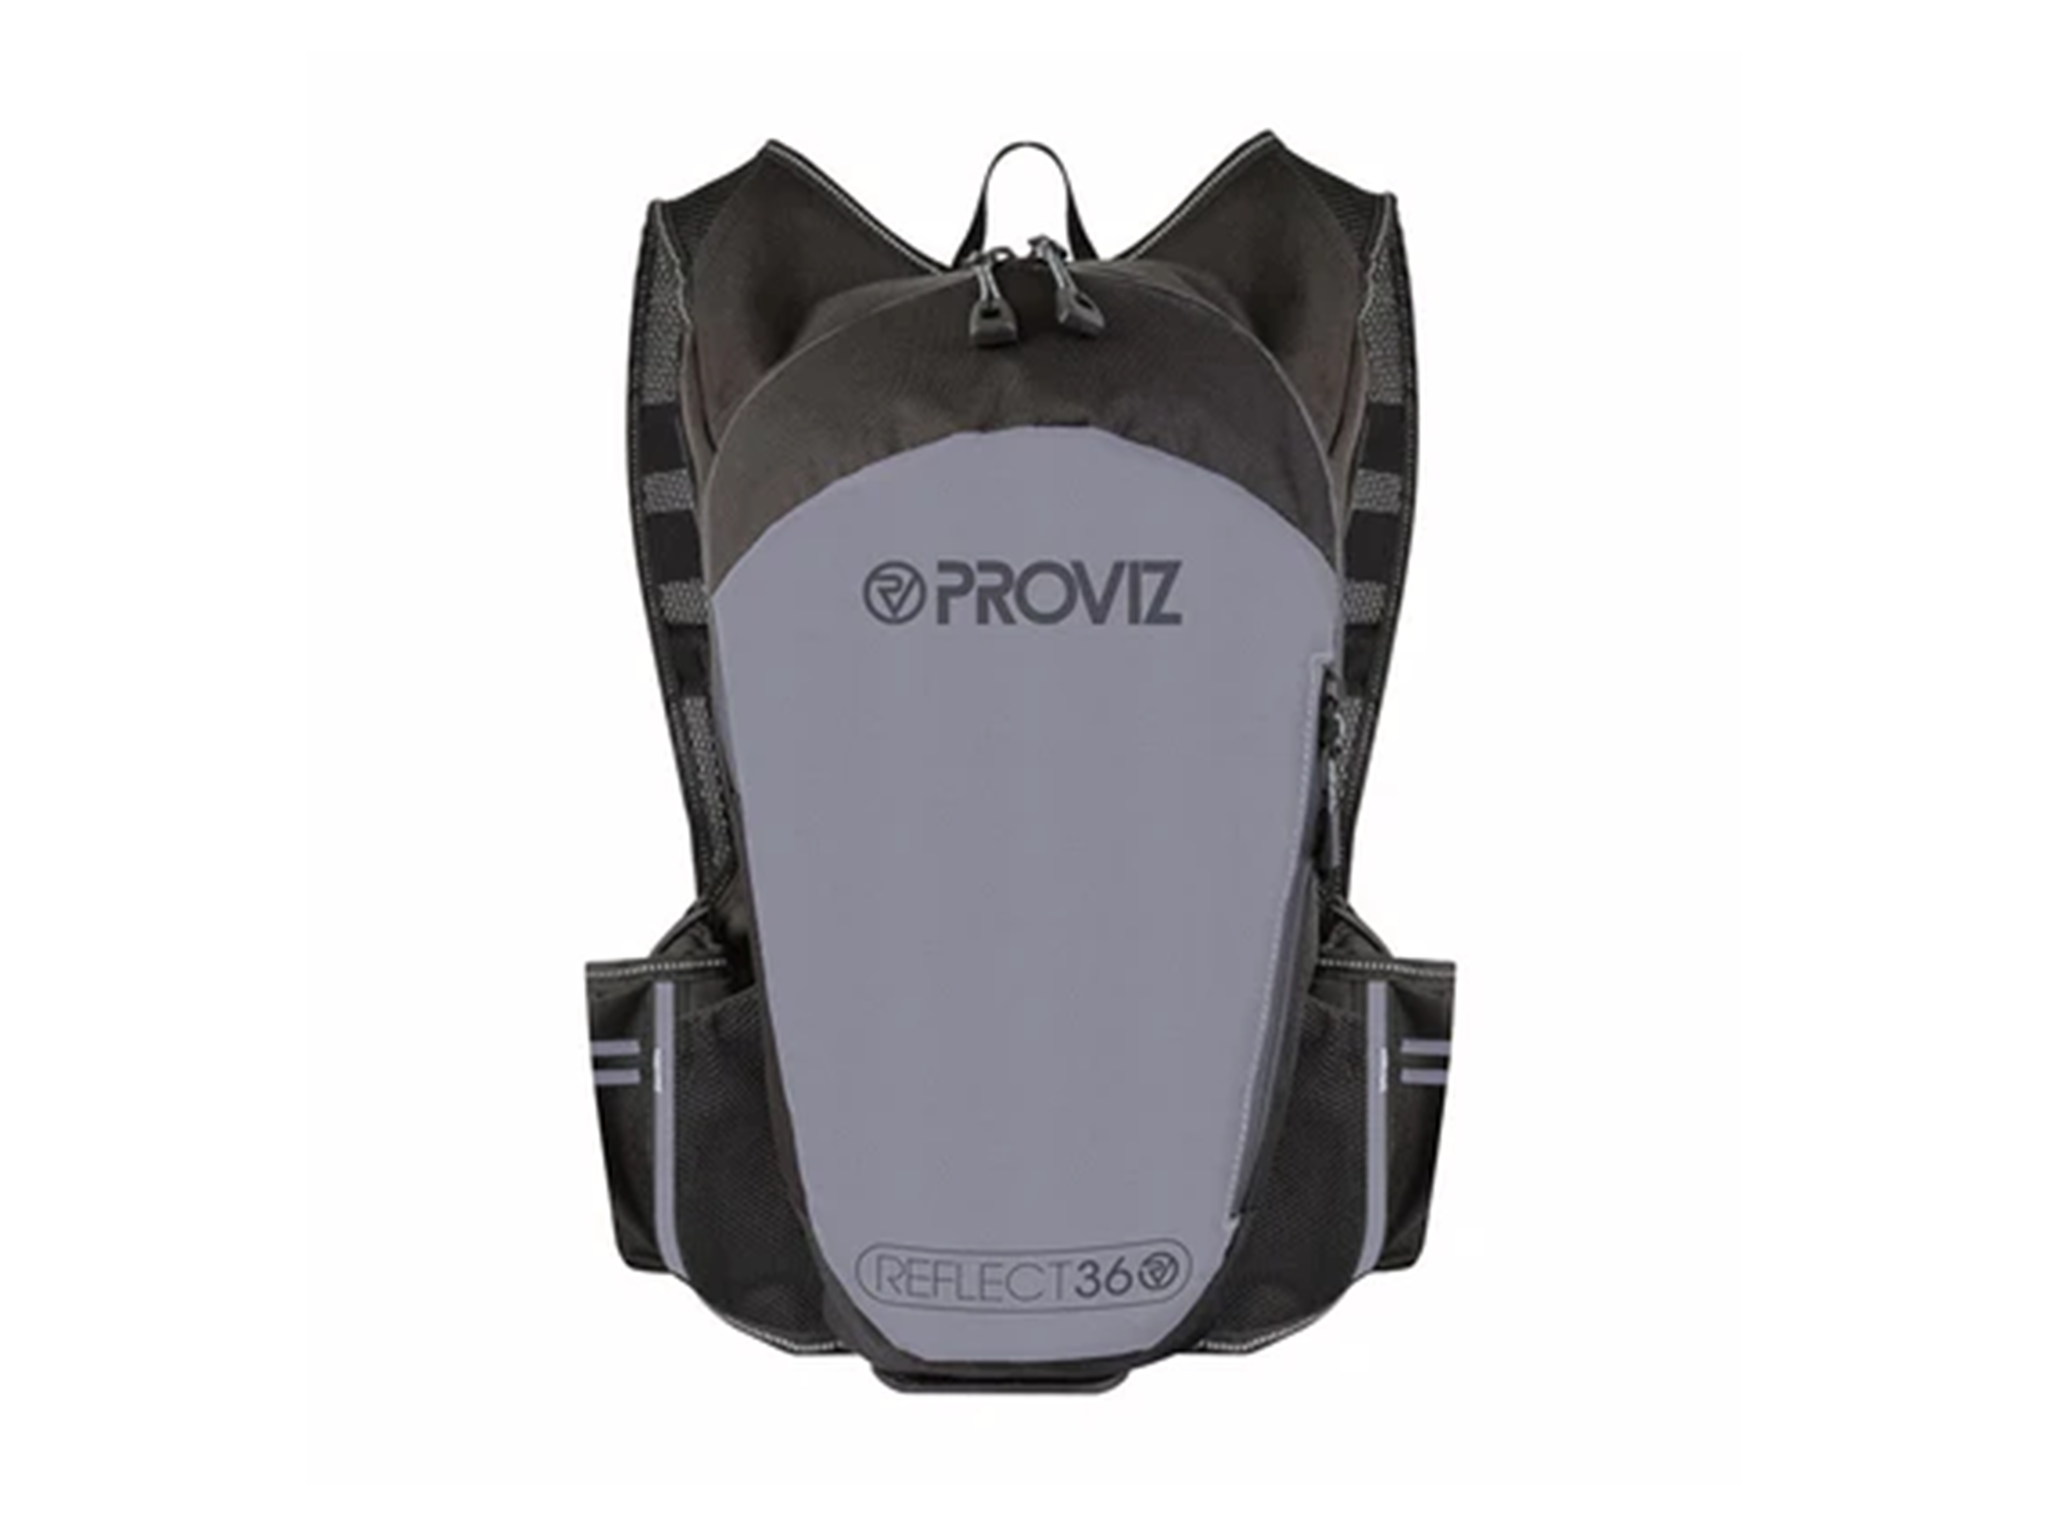 Proviz reflective breathable running 10l backpack